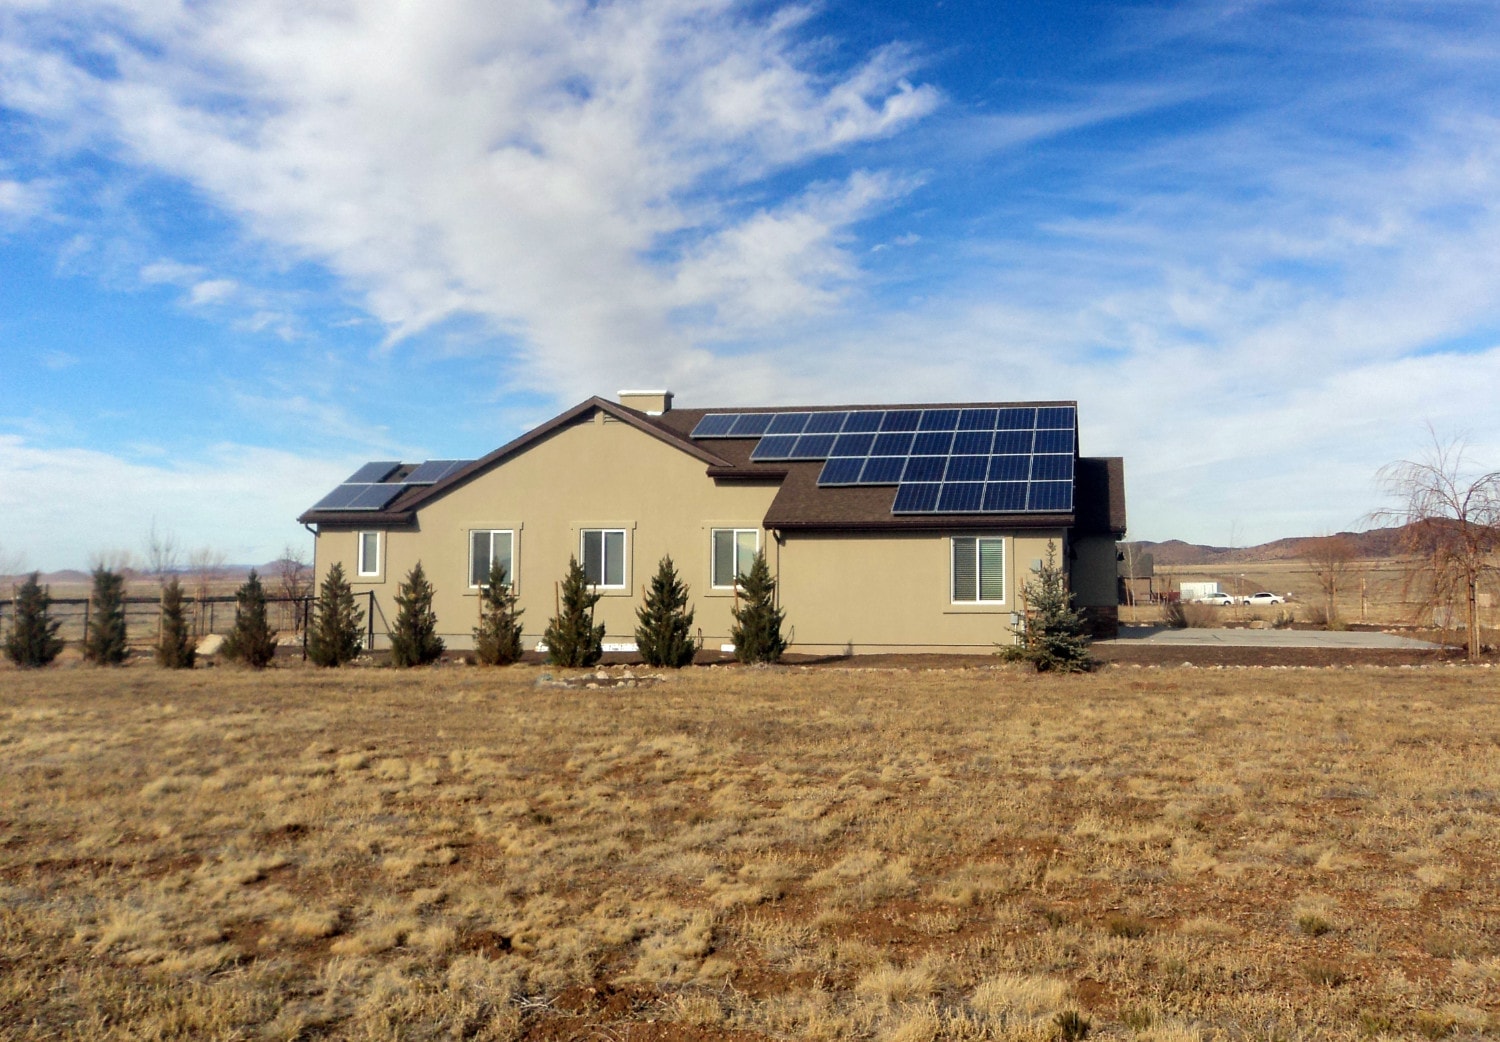 house in desert with solar panels